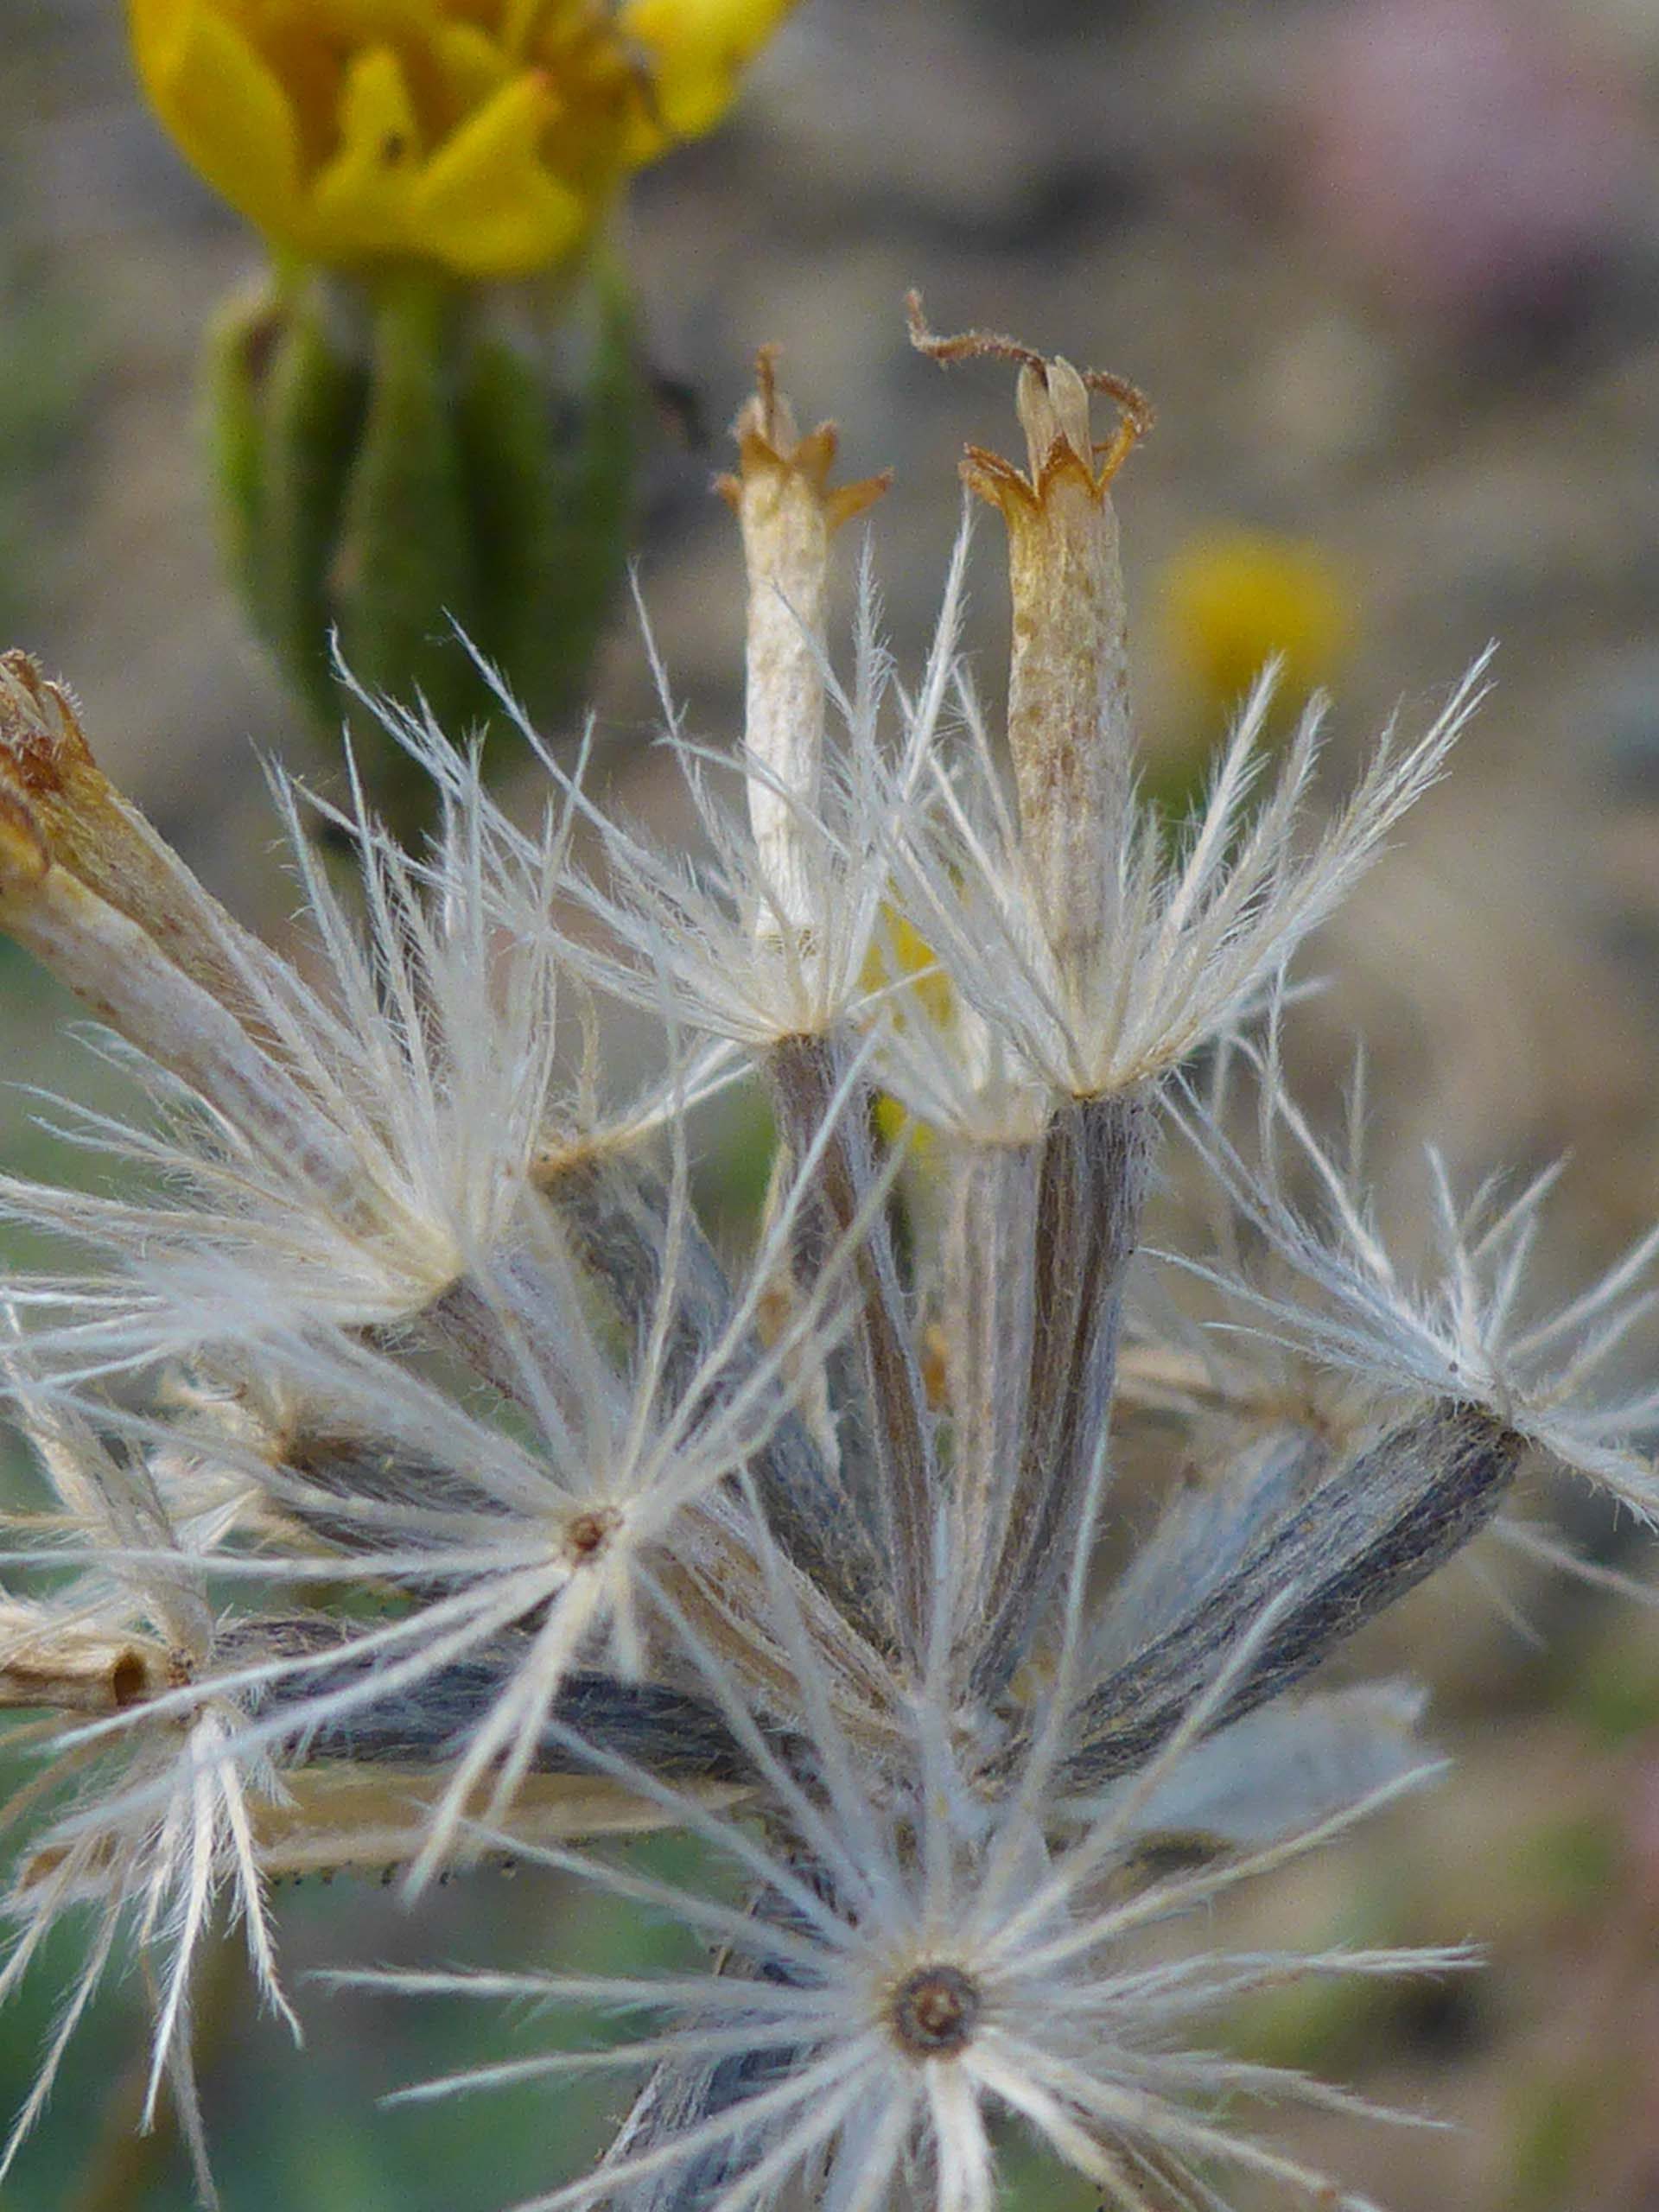 Close-up of scabrid alpine tarplant seeds. D. Burk.